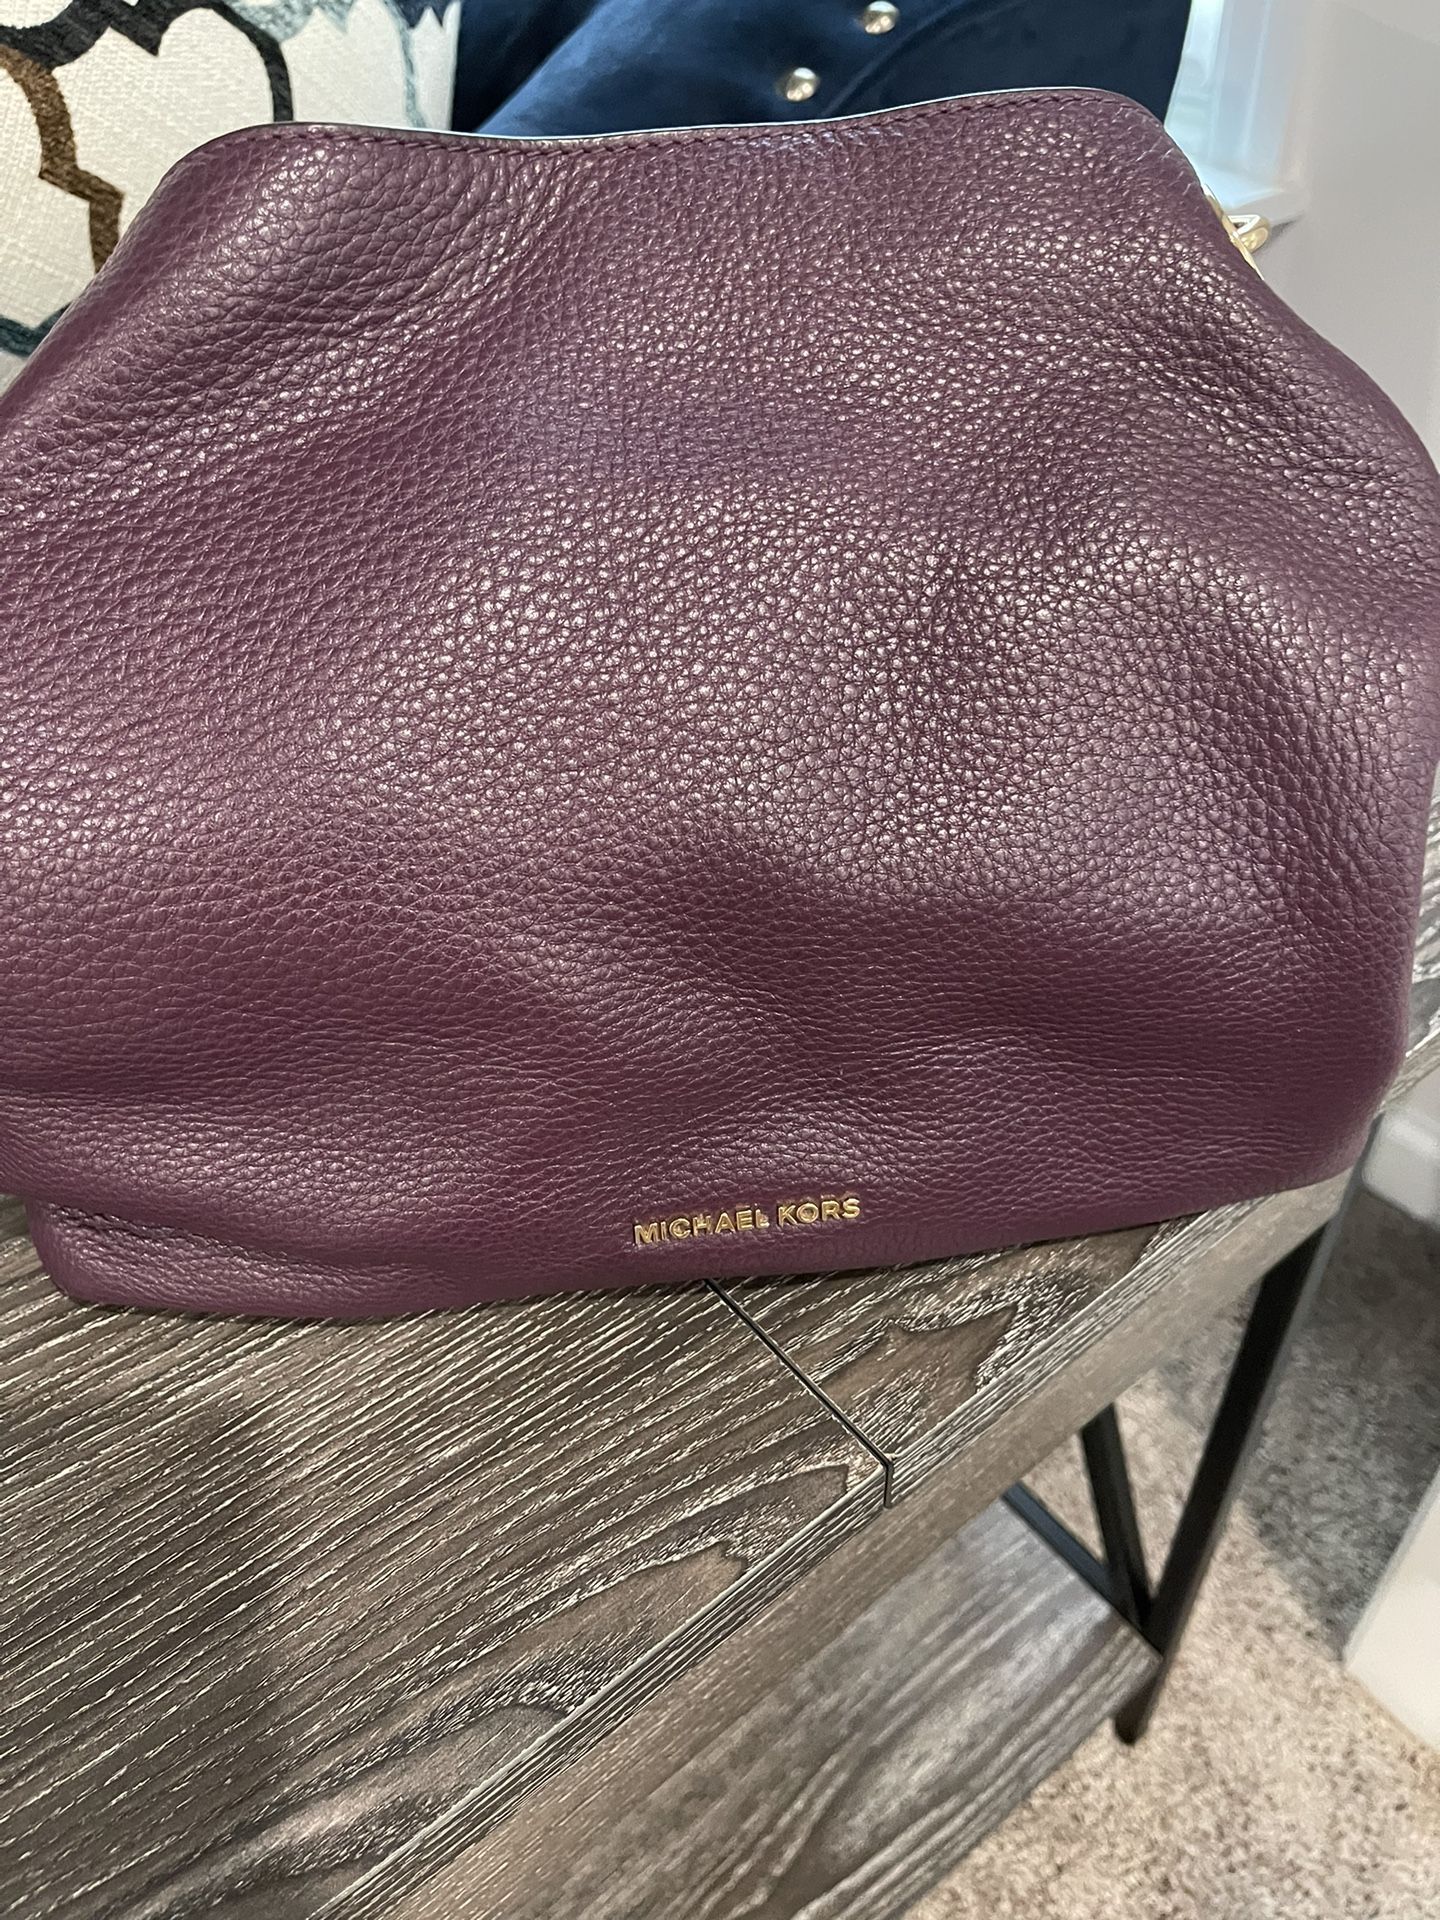 Michael Kors Wine Color Leather Handbag 